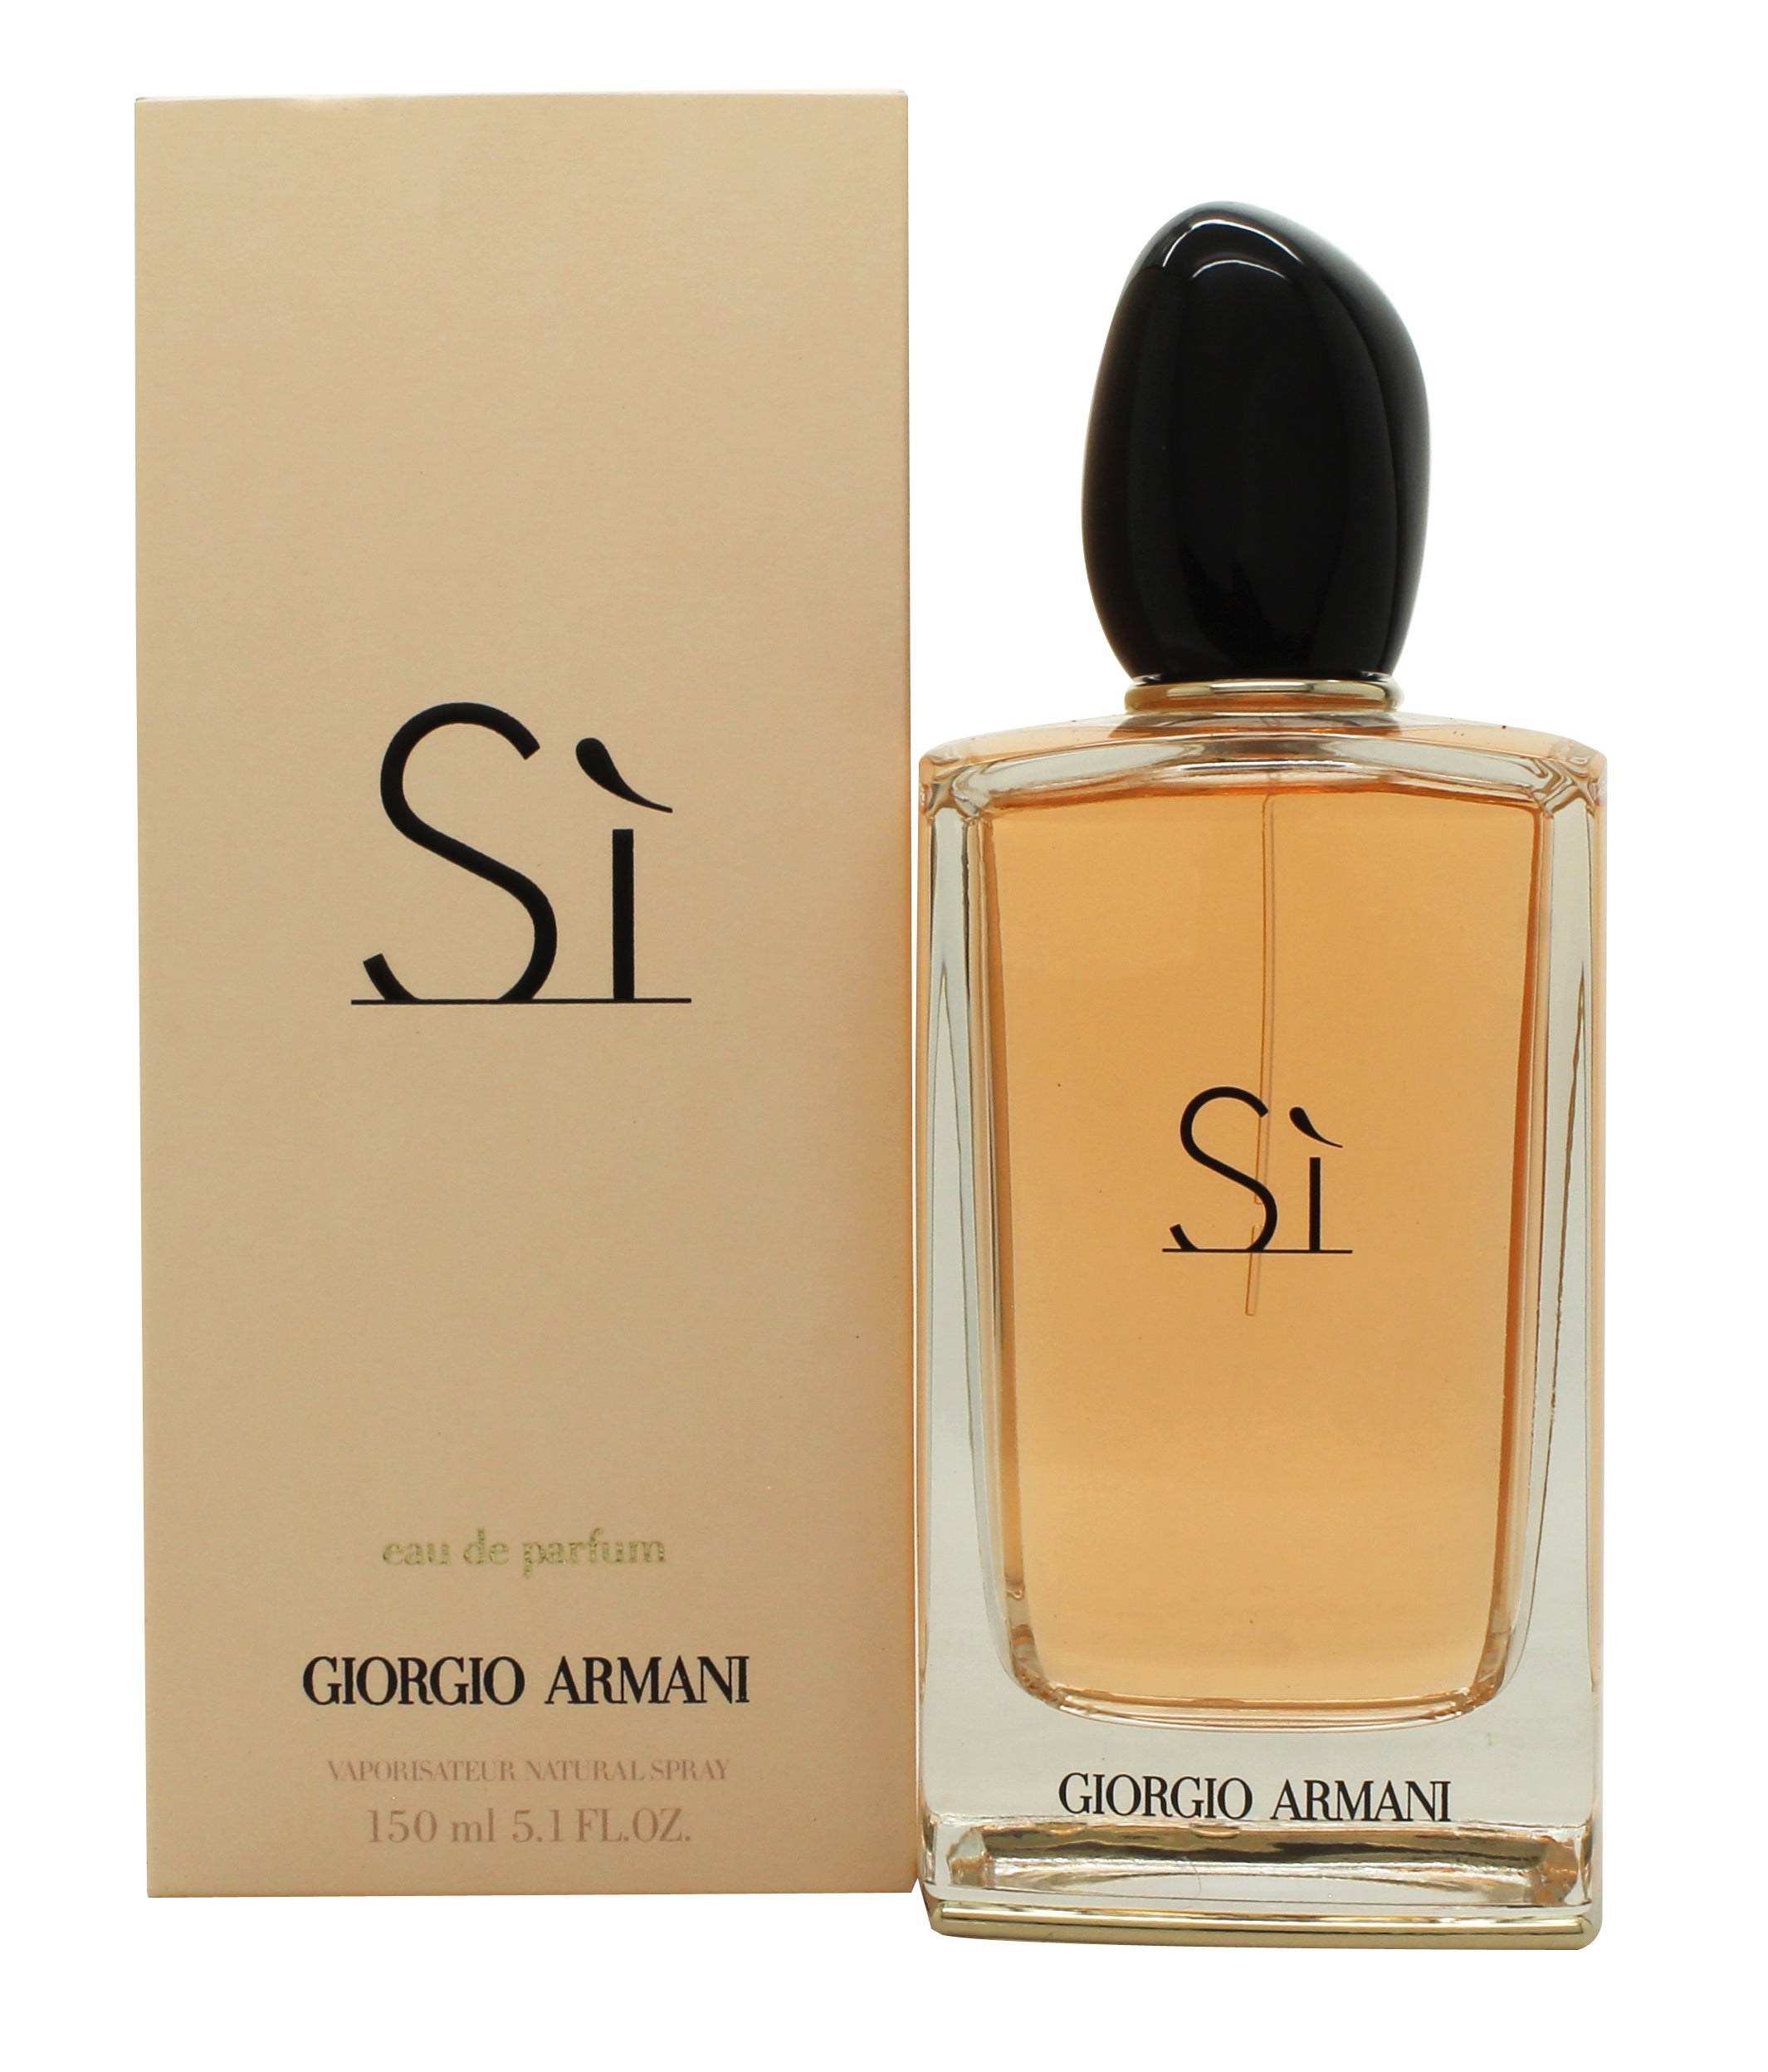 View Giorgio Armani Si Eau de Parfum 150ml Spray information